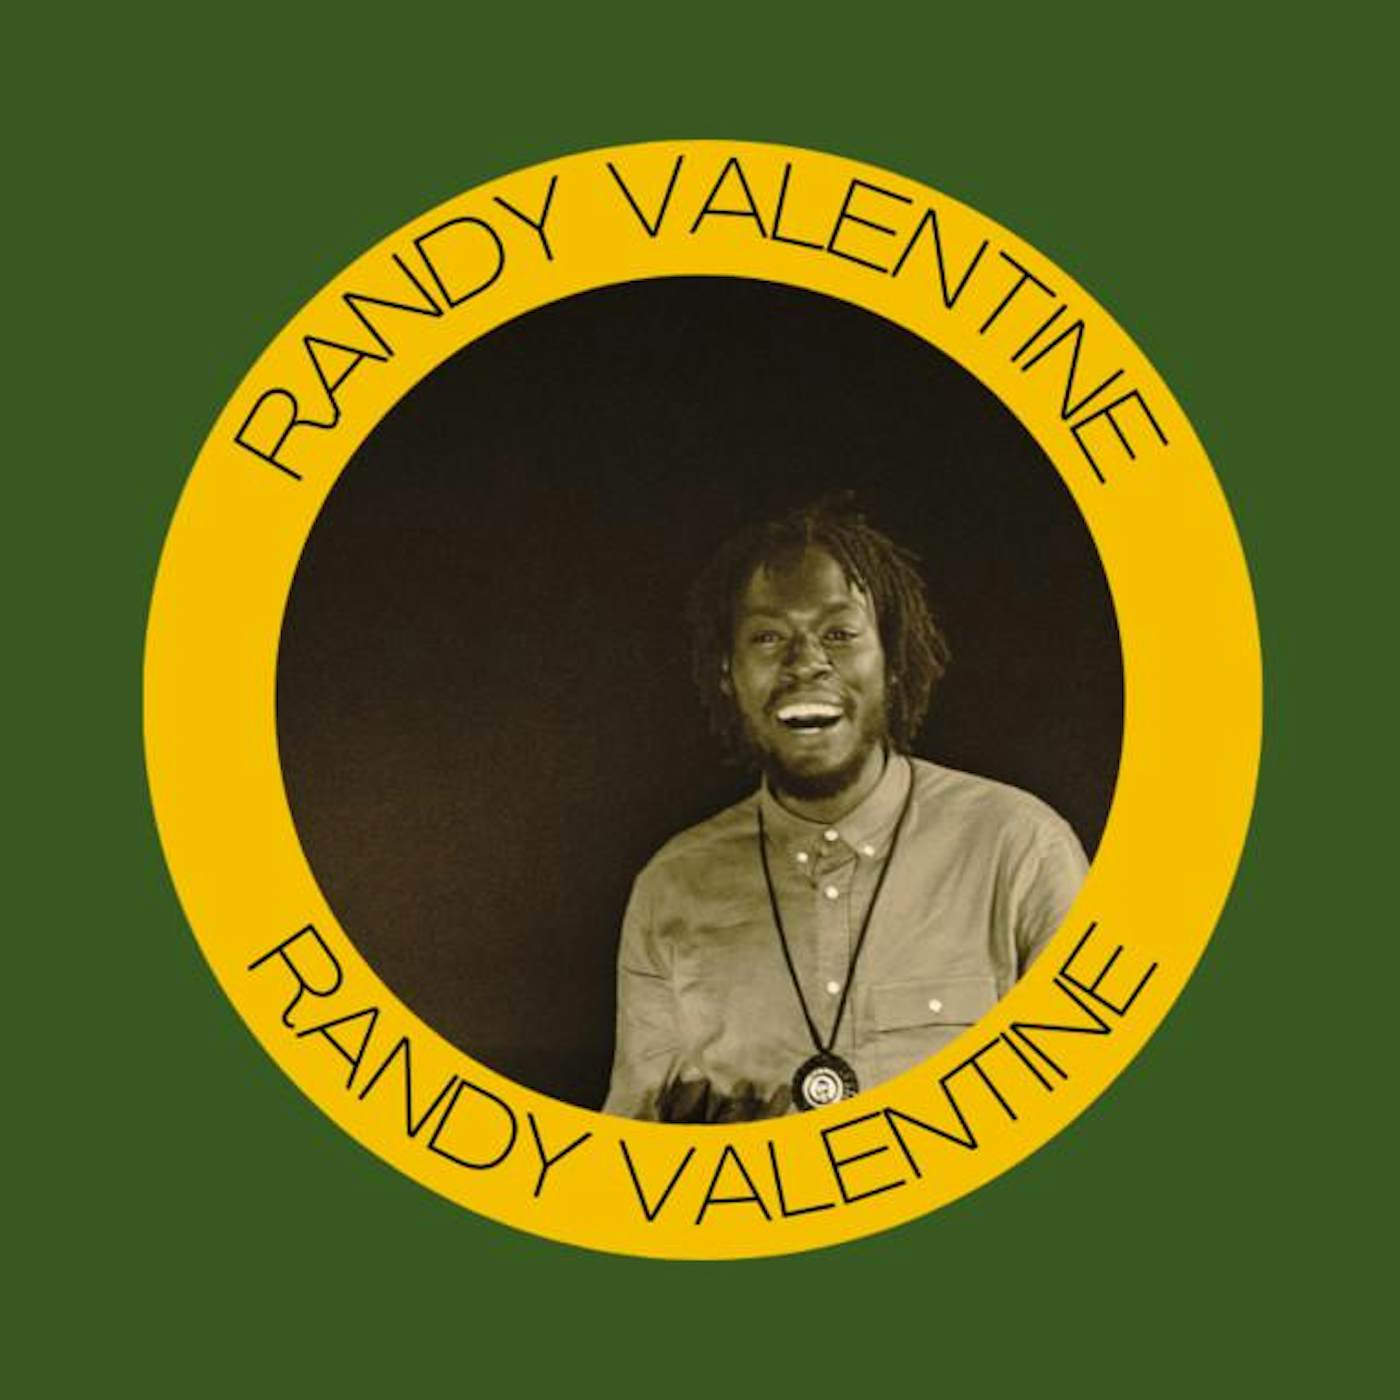 Randy Valentine